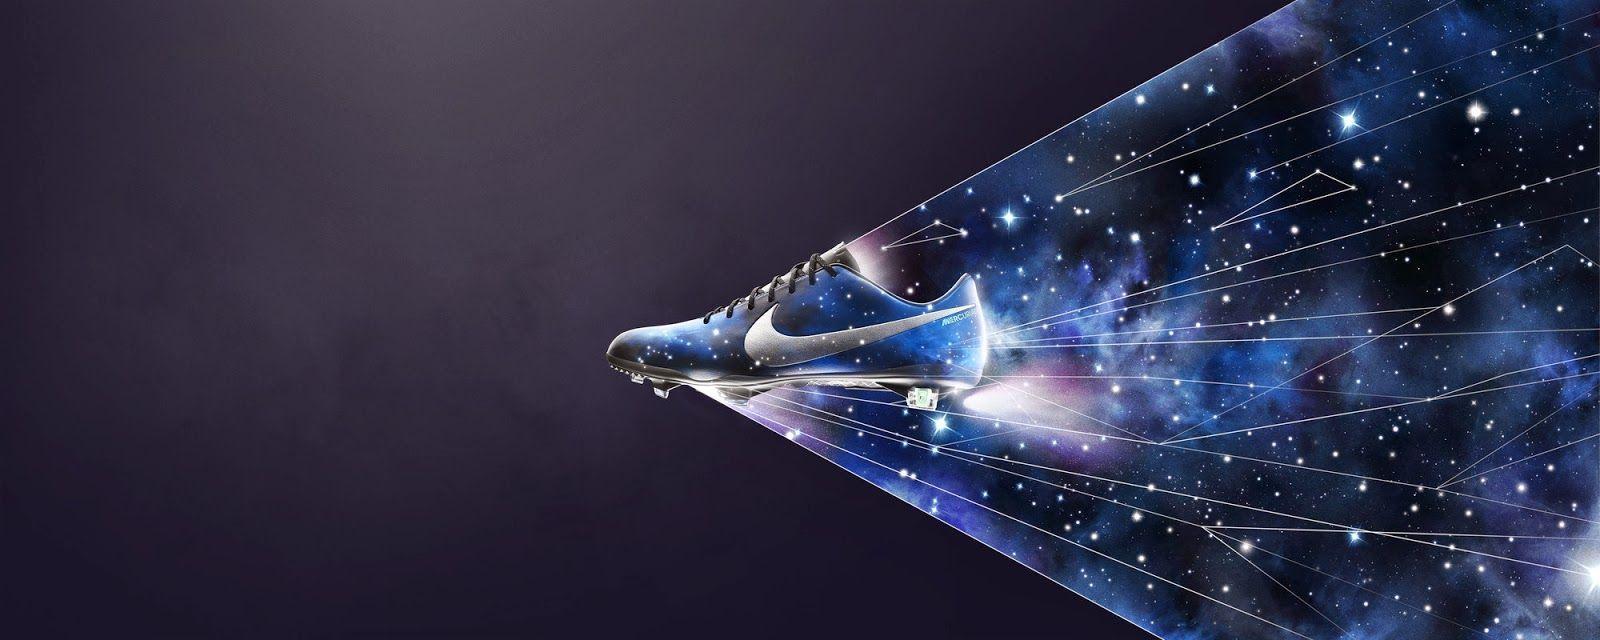 Download Cristiano Ronaldo Wallpaper Nike Mercurial 2015 1600x640